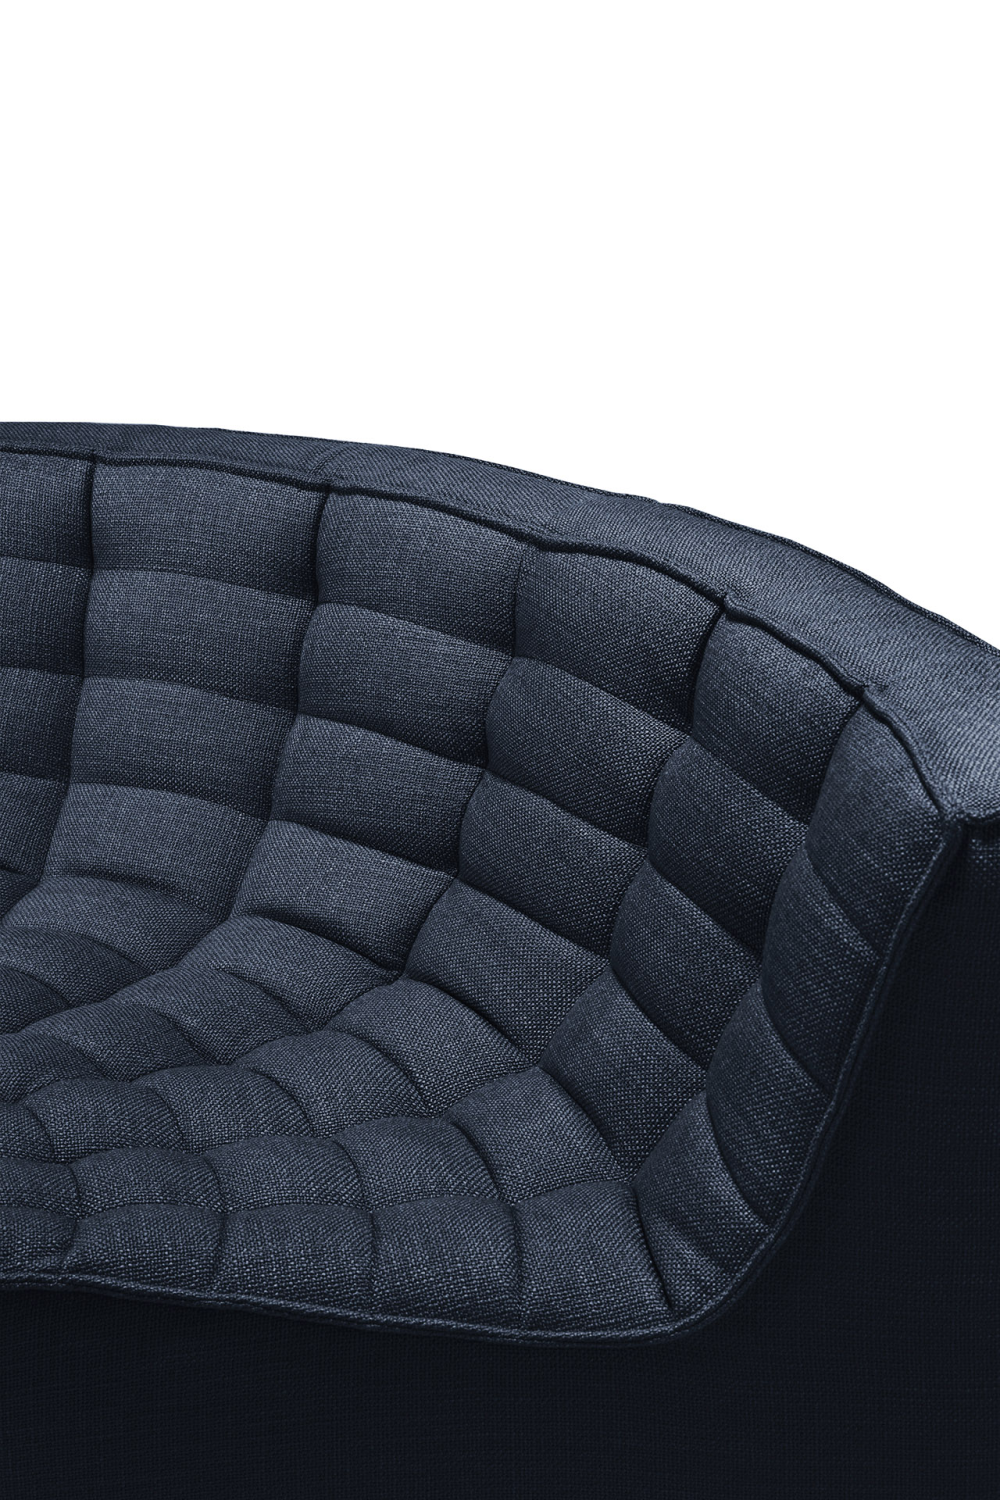 Blue Fabric Corner Sofa | Ethnicraft N701 | Oroa.com